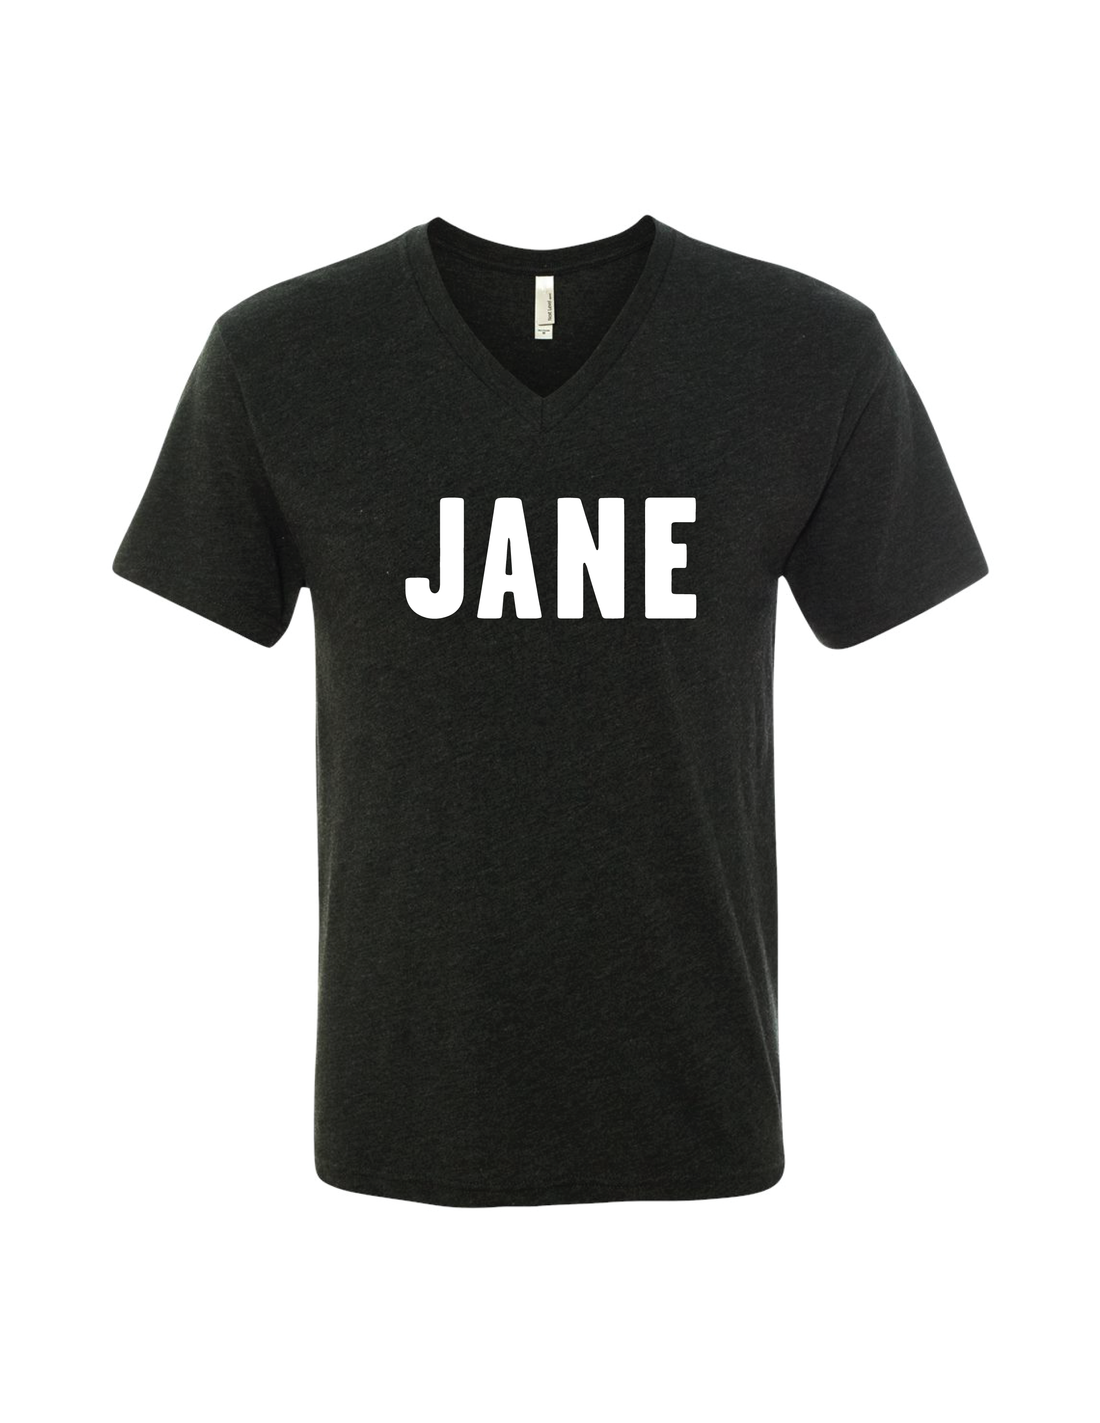 Unisex JANE V-Neck T-Shirt in Black with White Letters